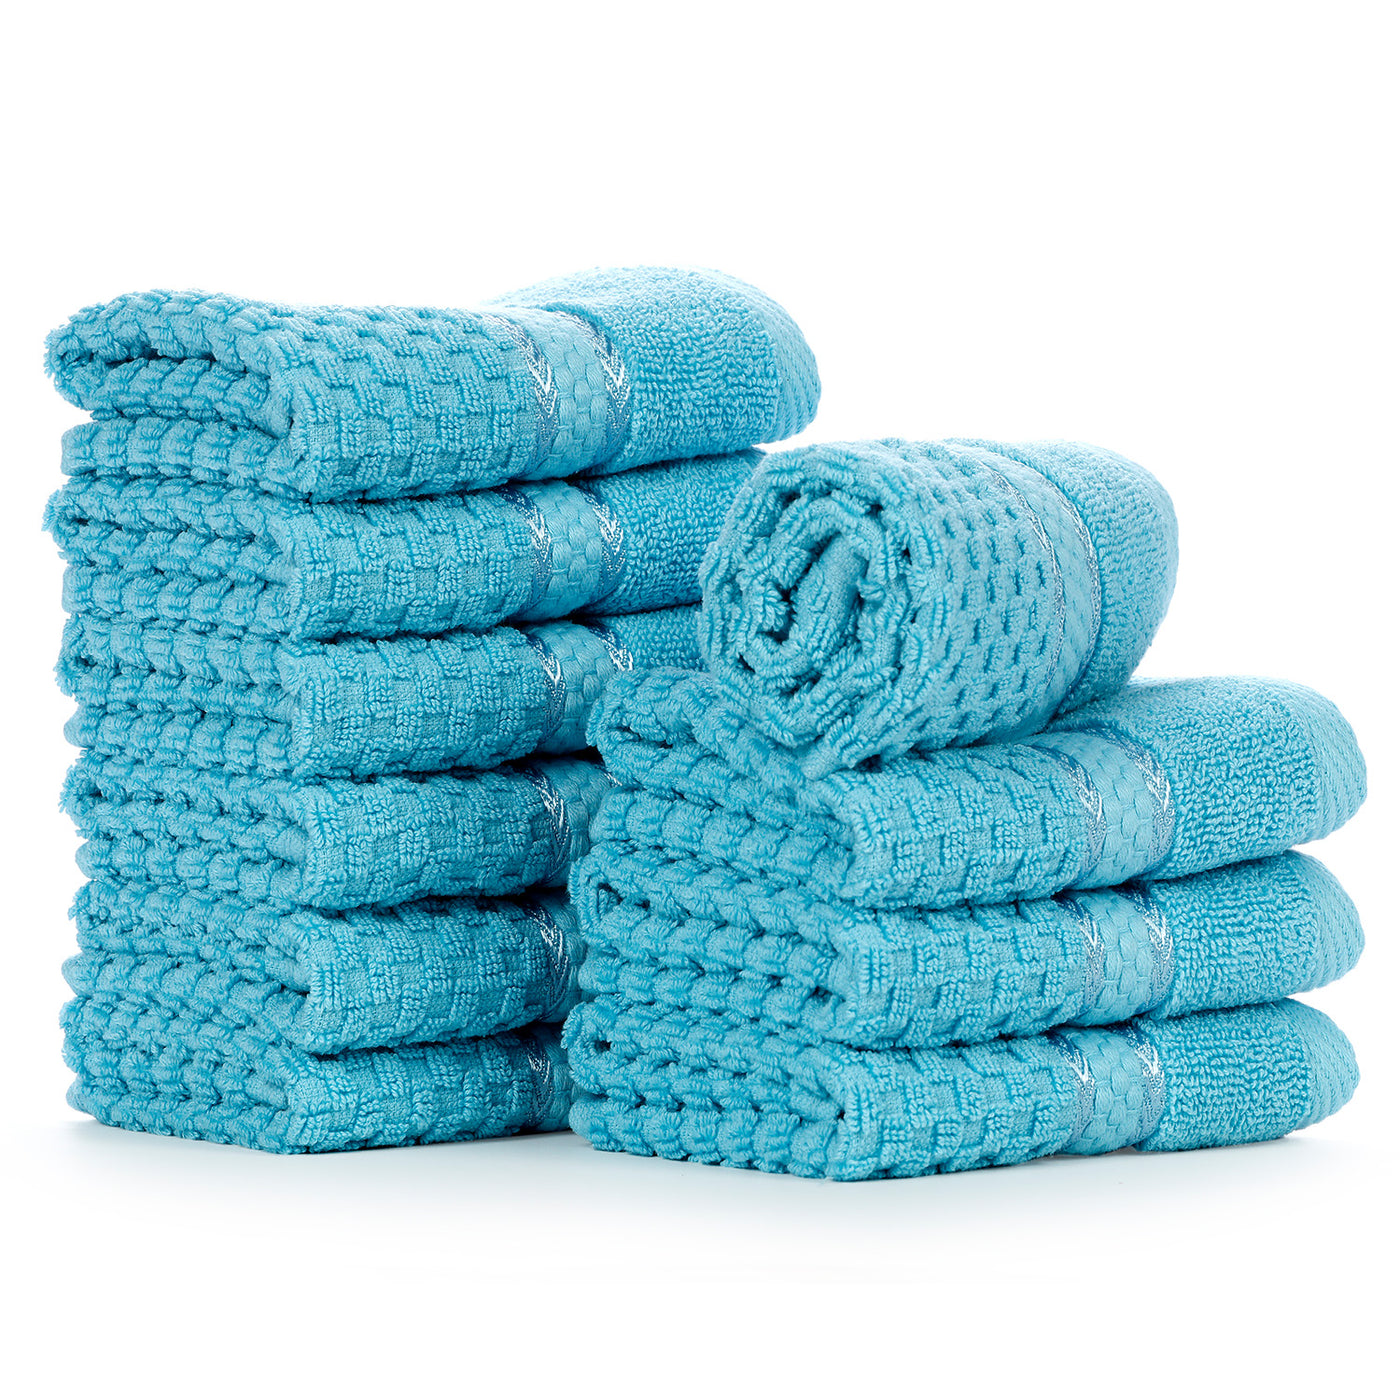 Villa Celestia Premium Wash cloth 100% Cotton Blue Wash Clothes